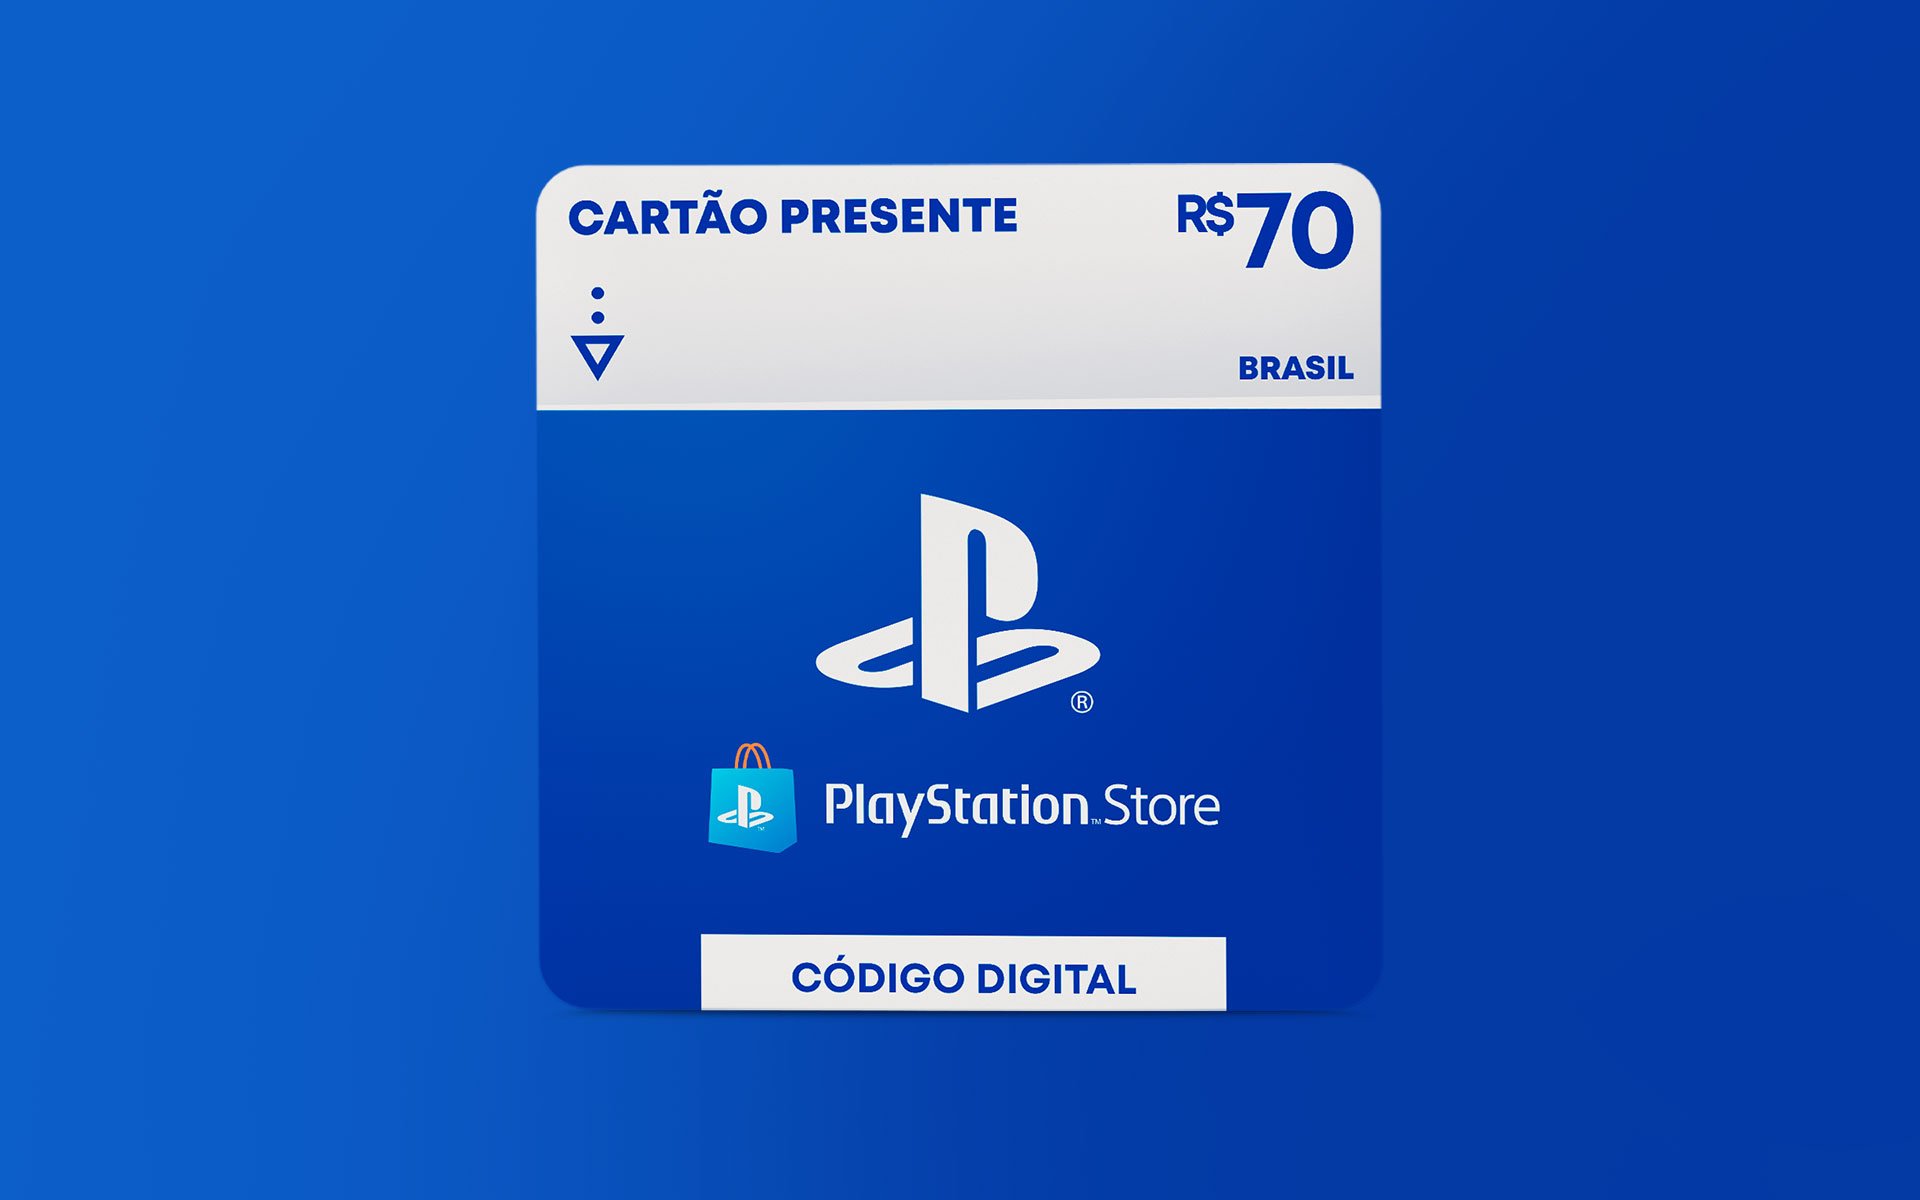 R$70 PlayStation Store - Cartão Presente Digital [Exclusivo Brasil]